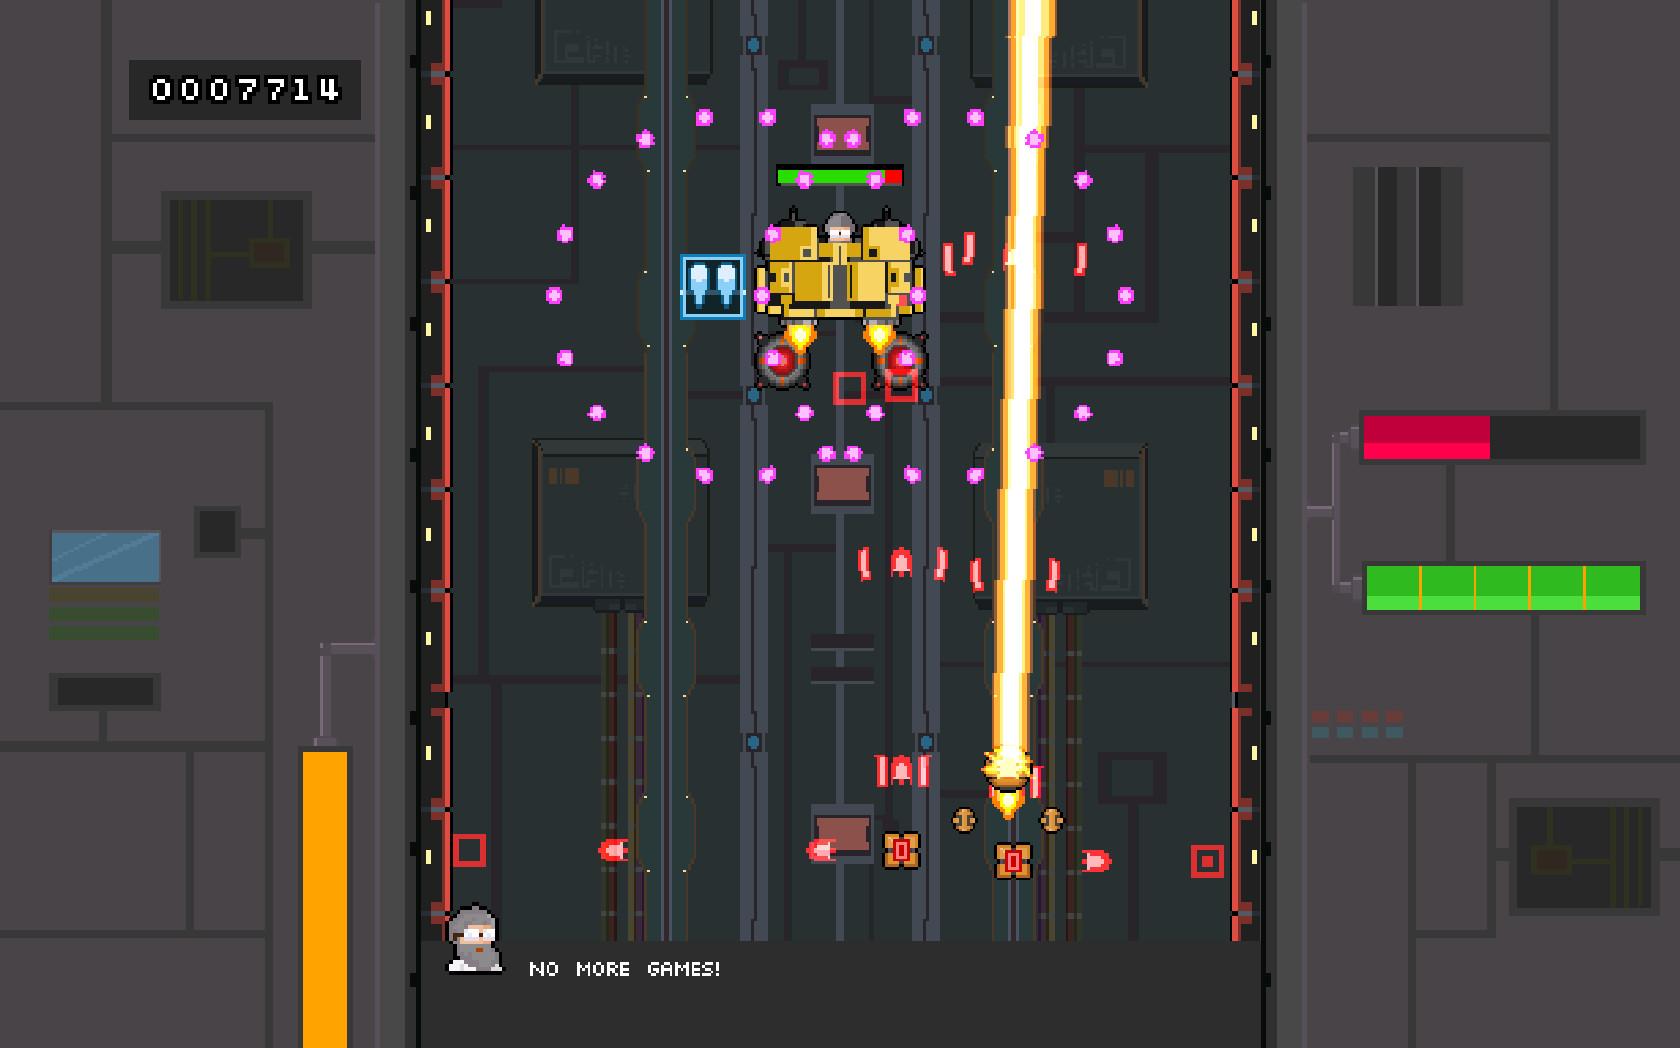 Screenshot №16 from game Madrobot X